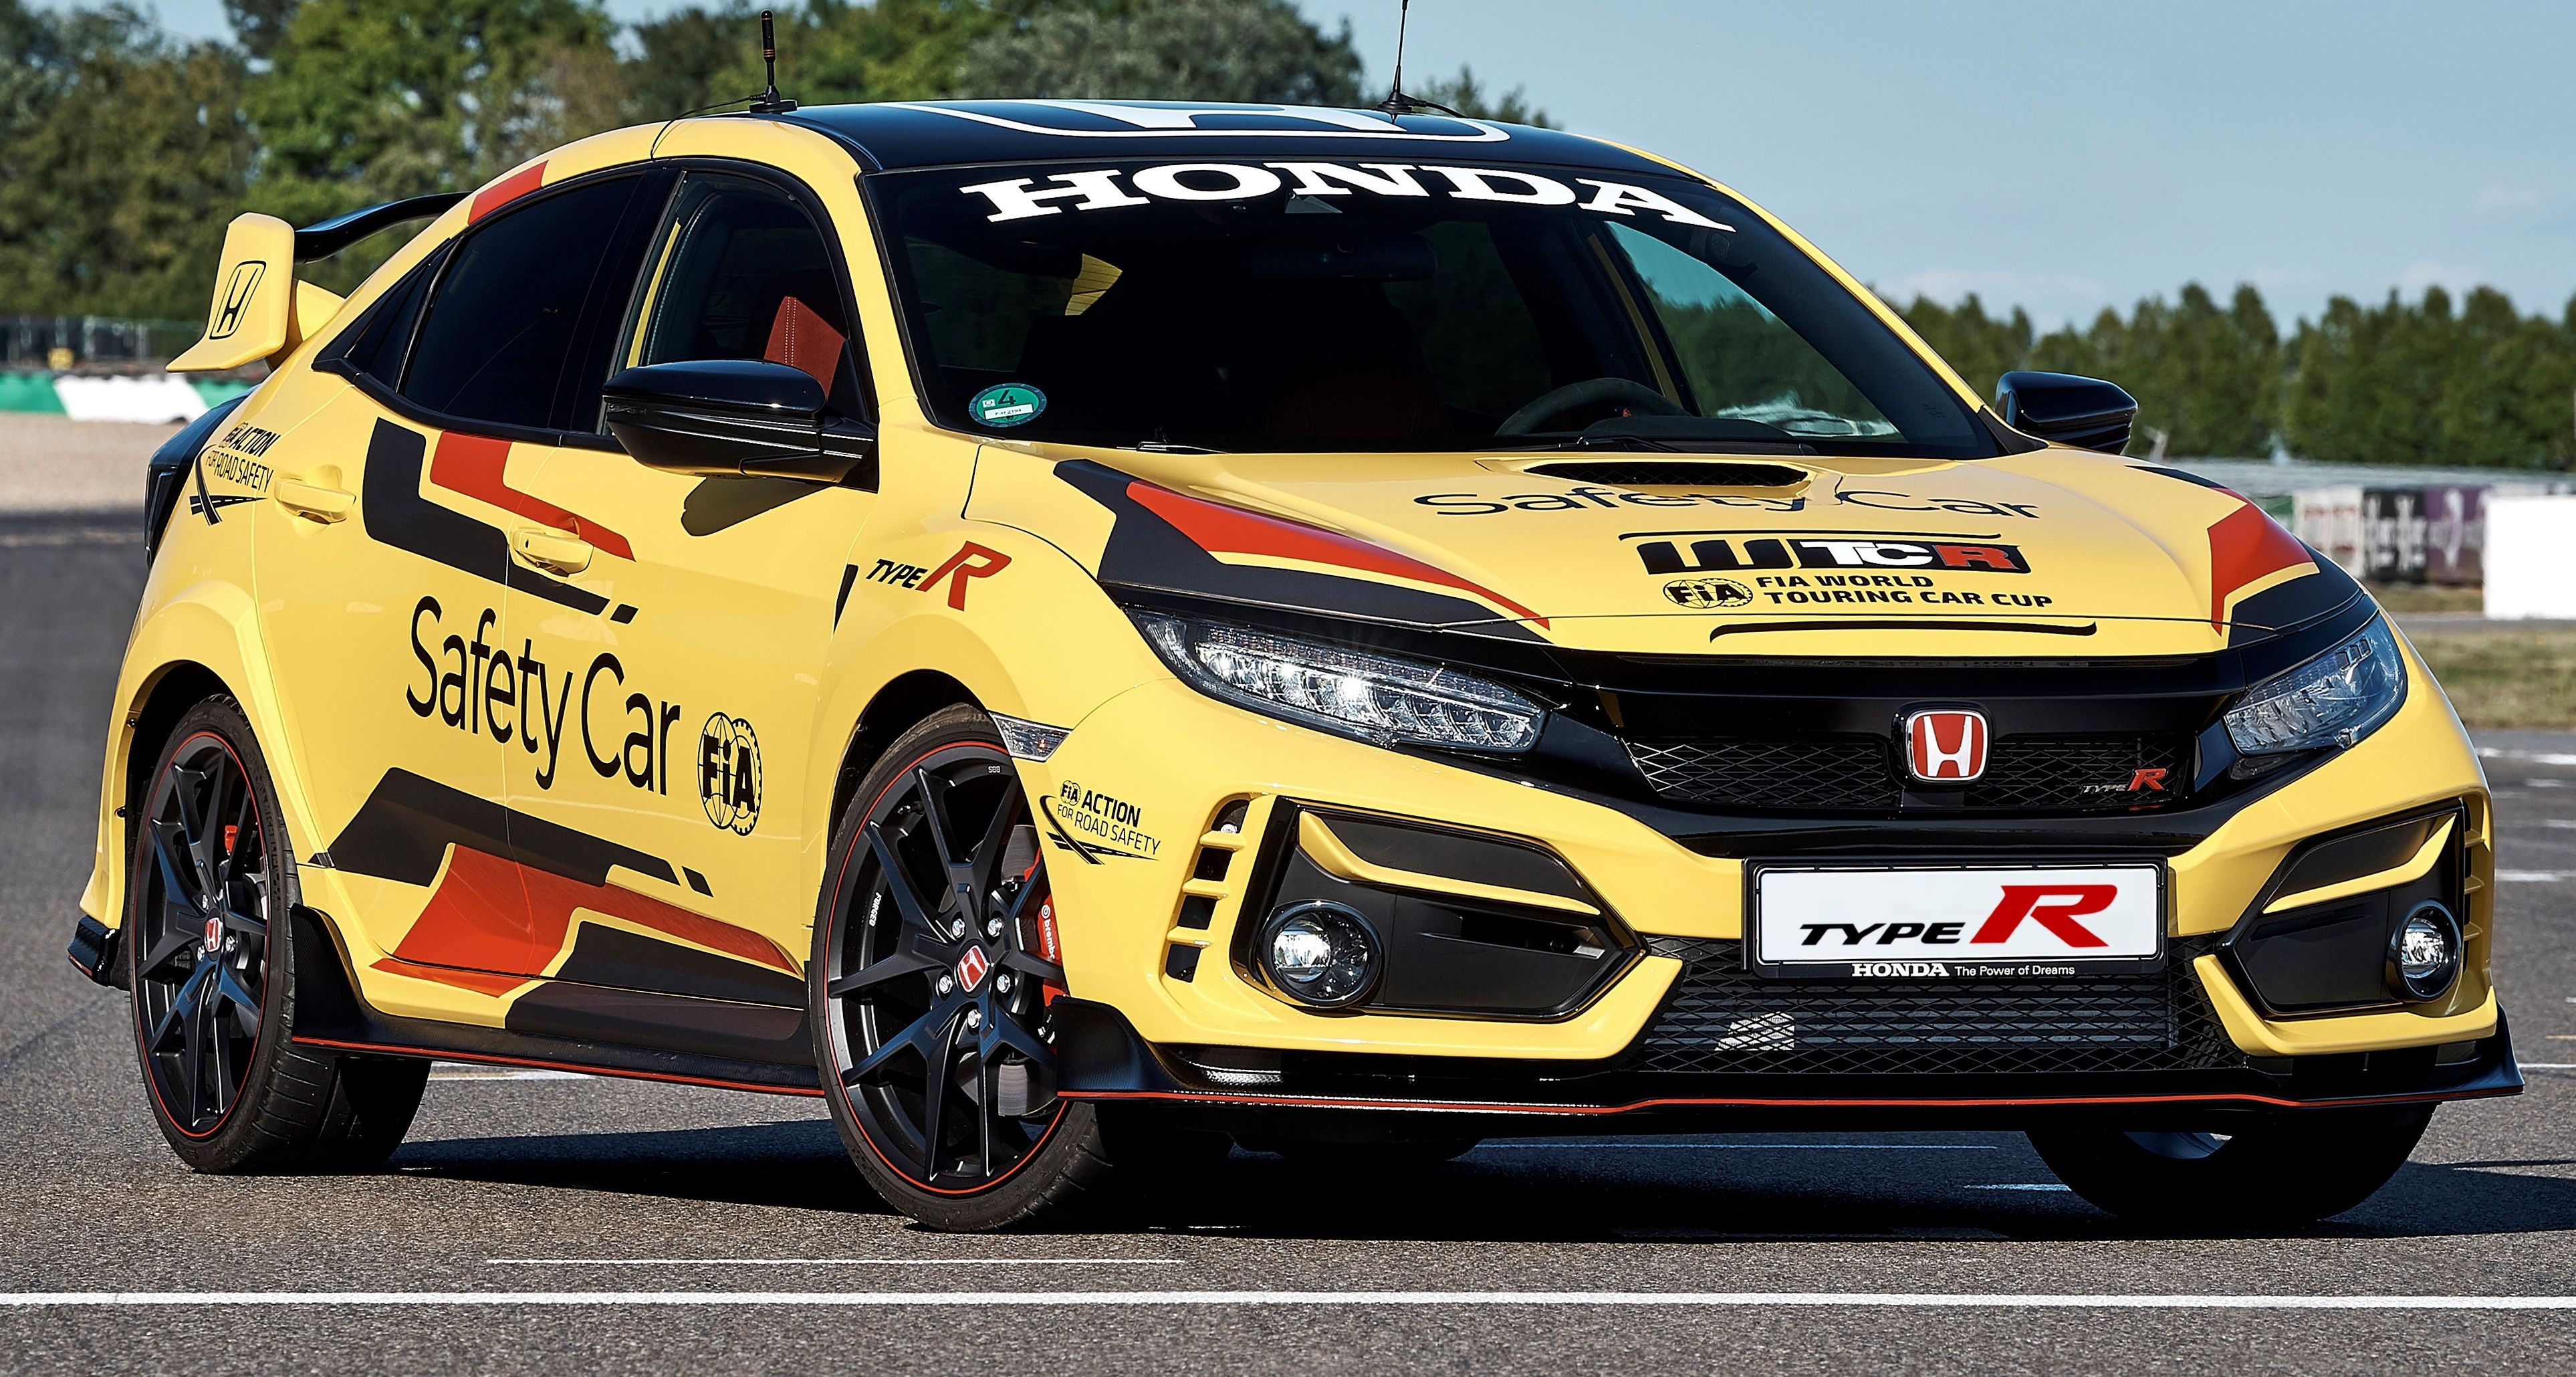 Honda Civic Type R Limited Edition dipilih sebagai ‘Safety Car’ rasmi untuk perlumbaan WTCR 2020